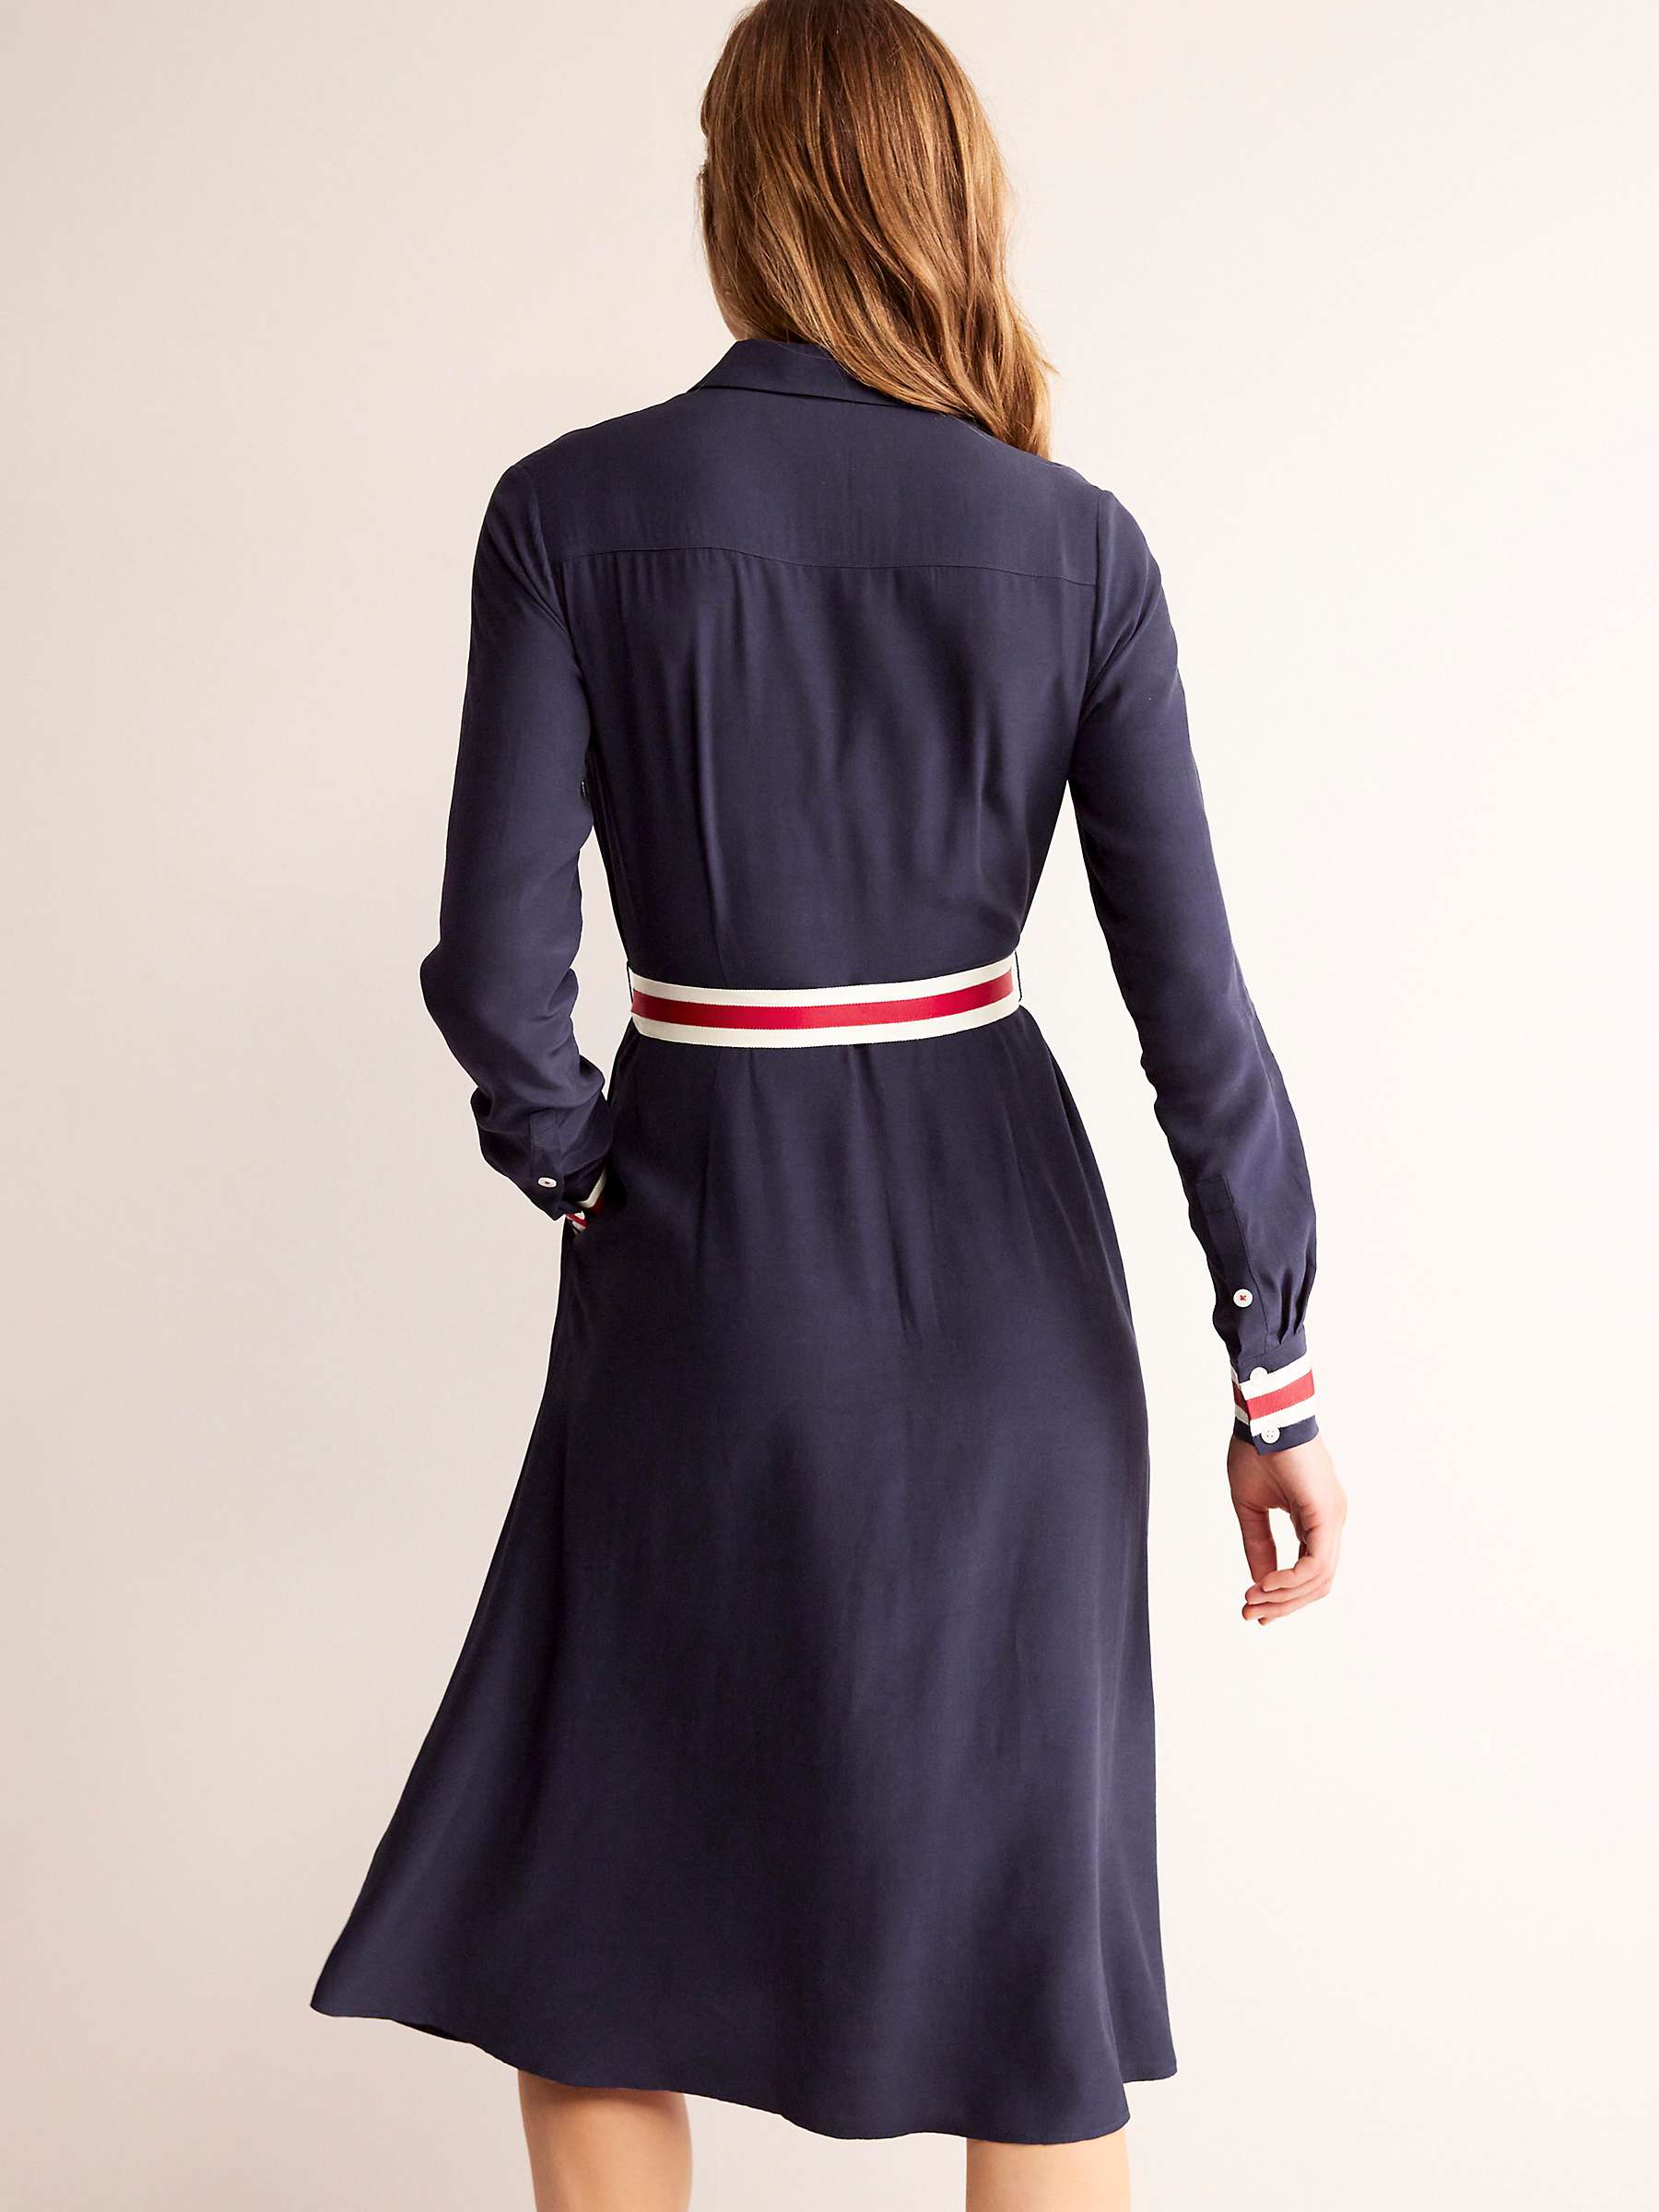 Buy Boden Kate Tipping Shirt Dress, Navy/Multi Online at johnlewis.com